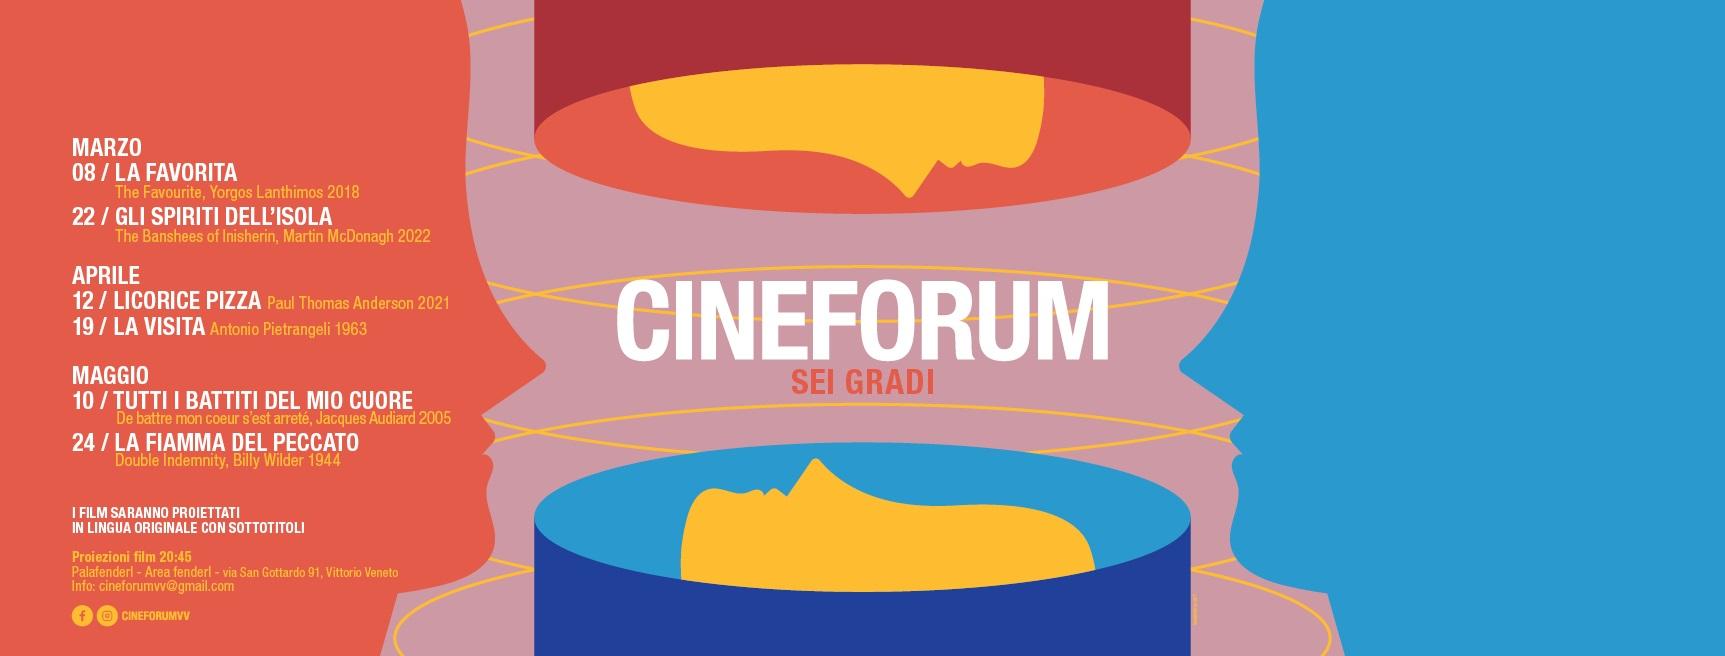 Cineforum - Sei gradi 